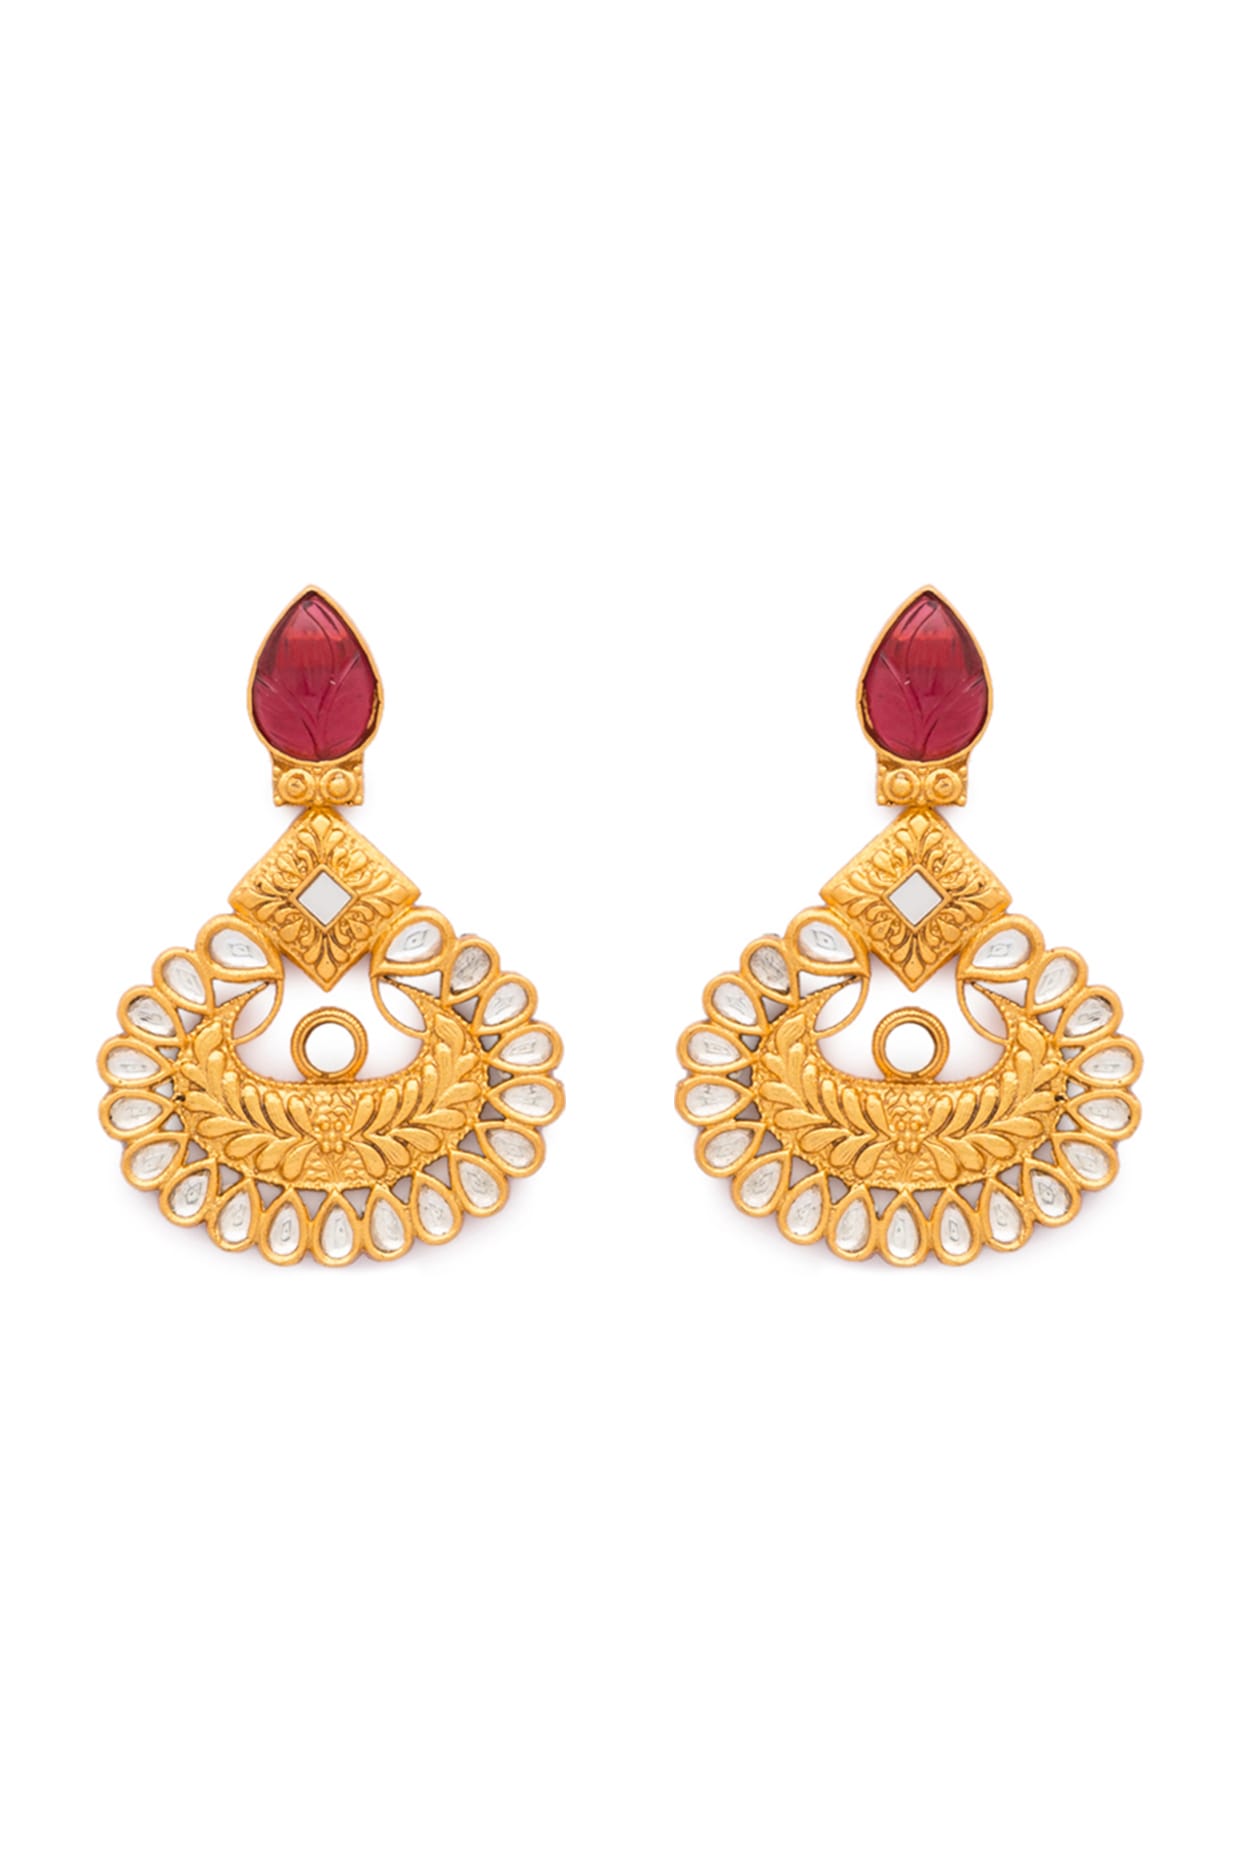 Malabar Gold & Diamonds Ruby and Emerald BIS Hallmark 22kt (916) Yellow Gold  Chandbali Earrings For Women (ERSNGGM056) : Amazon.in: Fashion